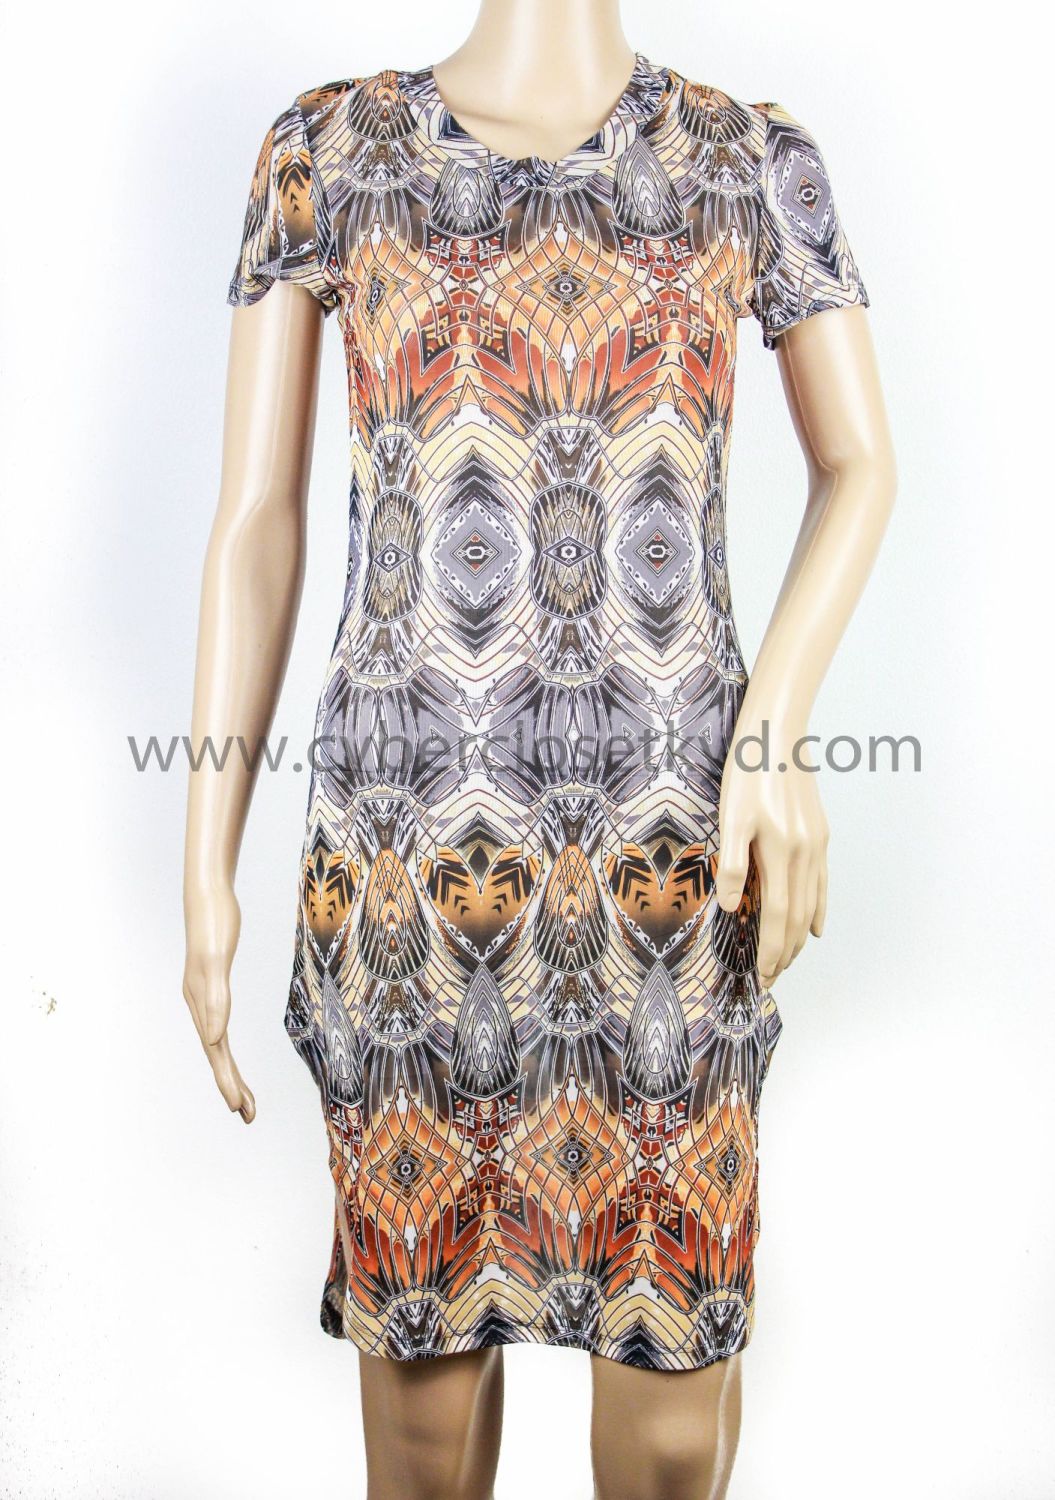 B352 - Printed Mesh Dress Size: M